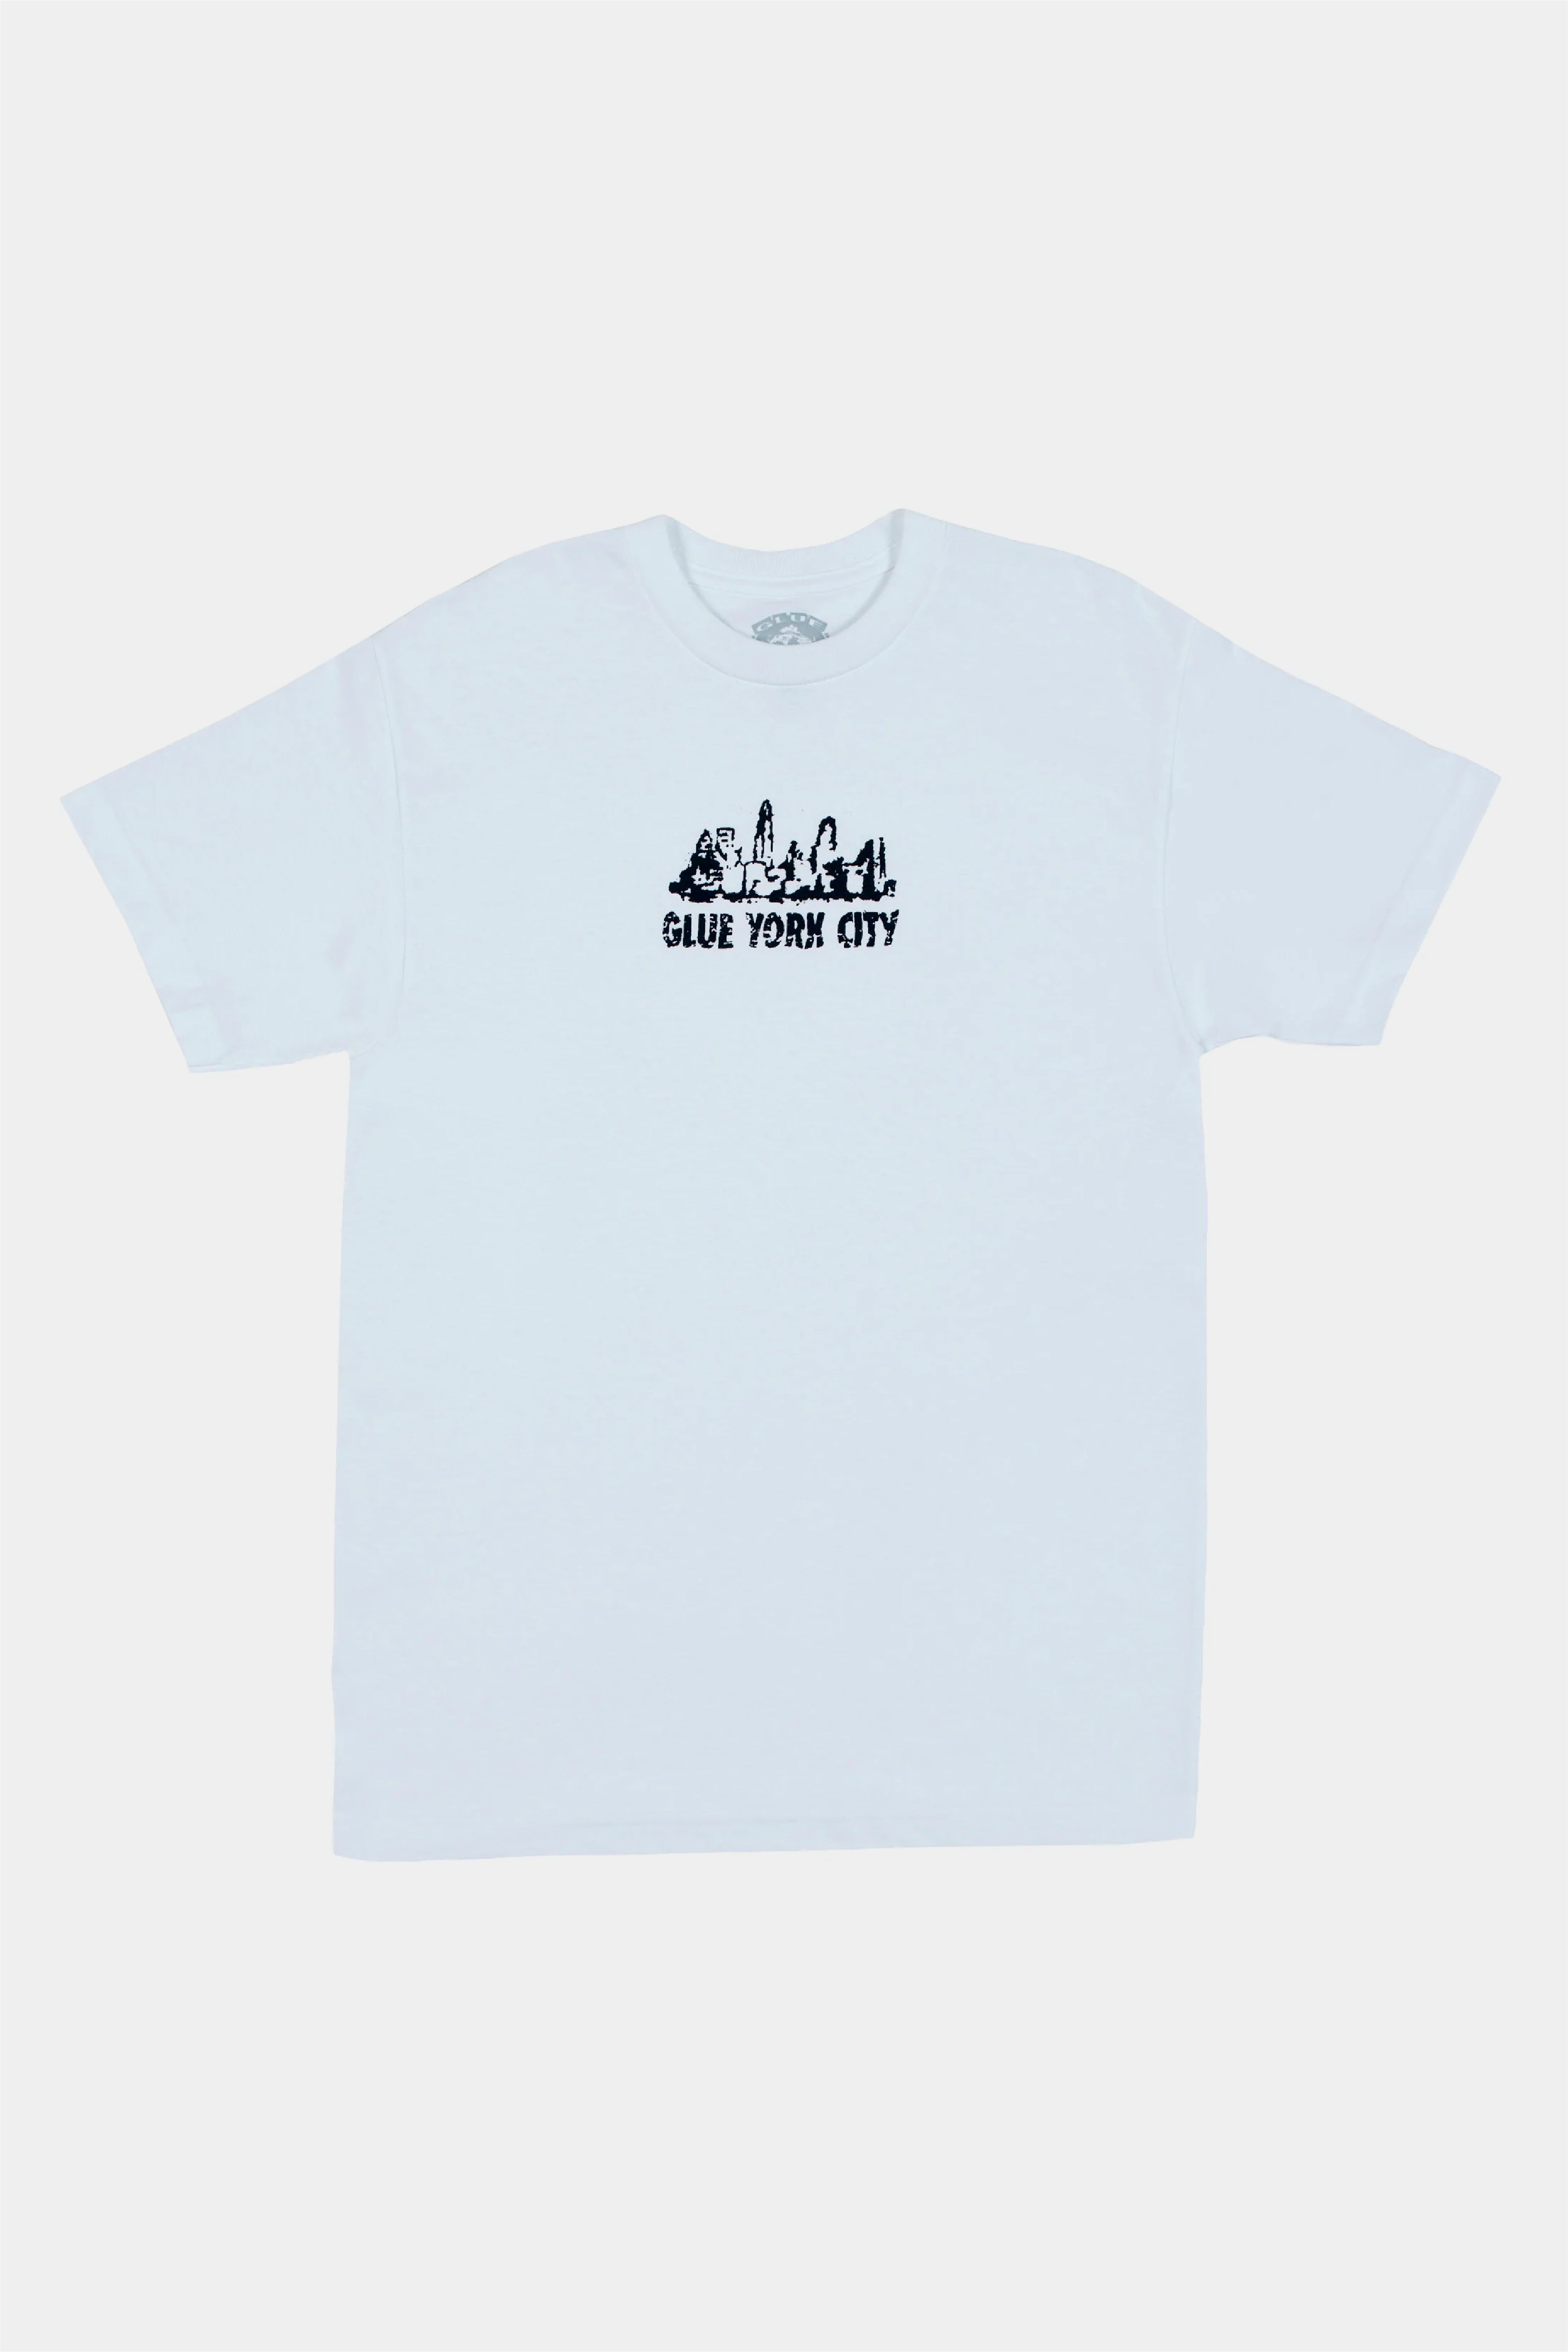 Selectshop FRAME - GLUE Glue York City Tee T-Shirts Dubai